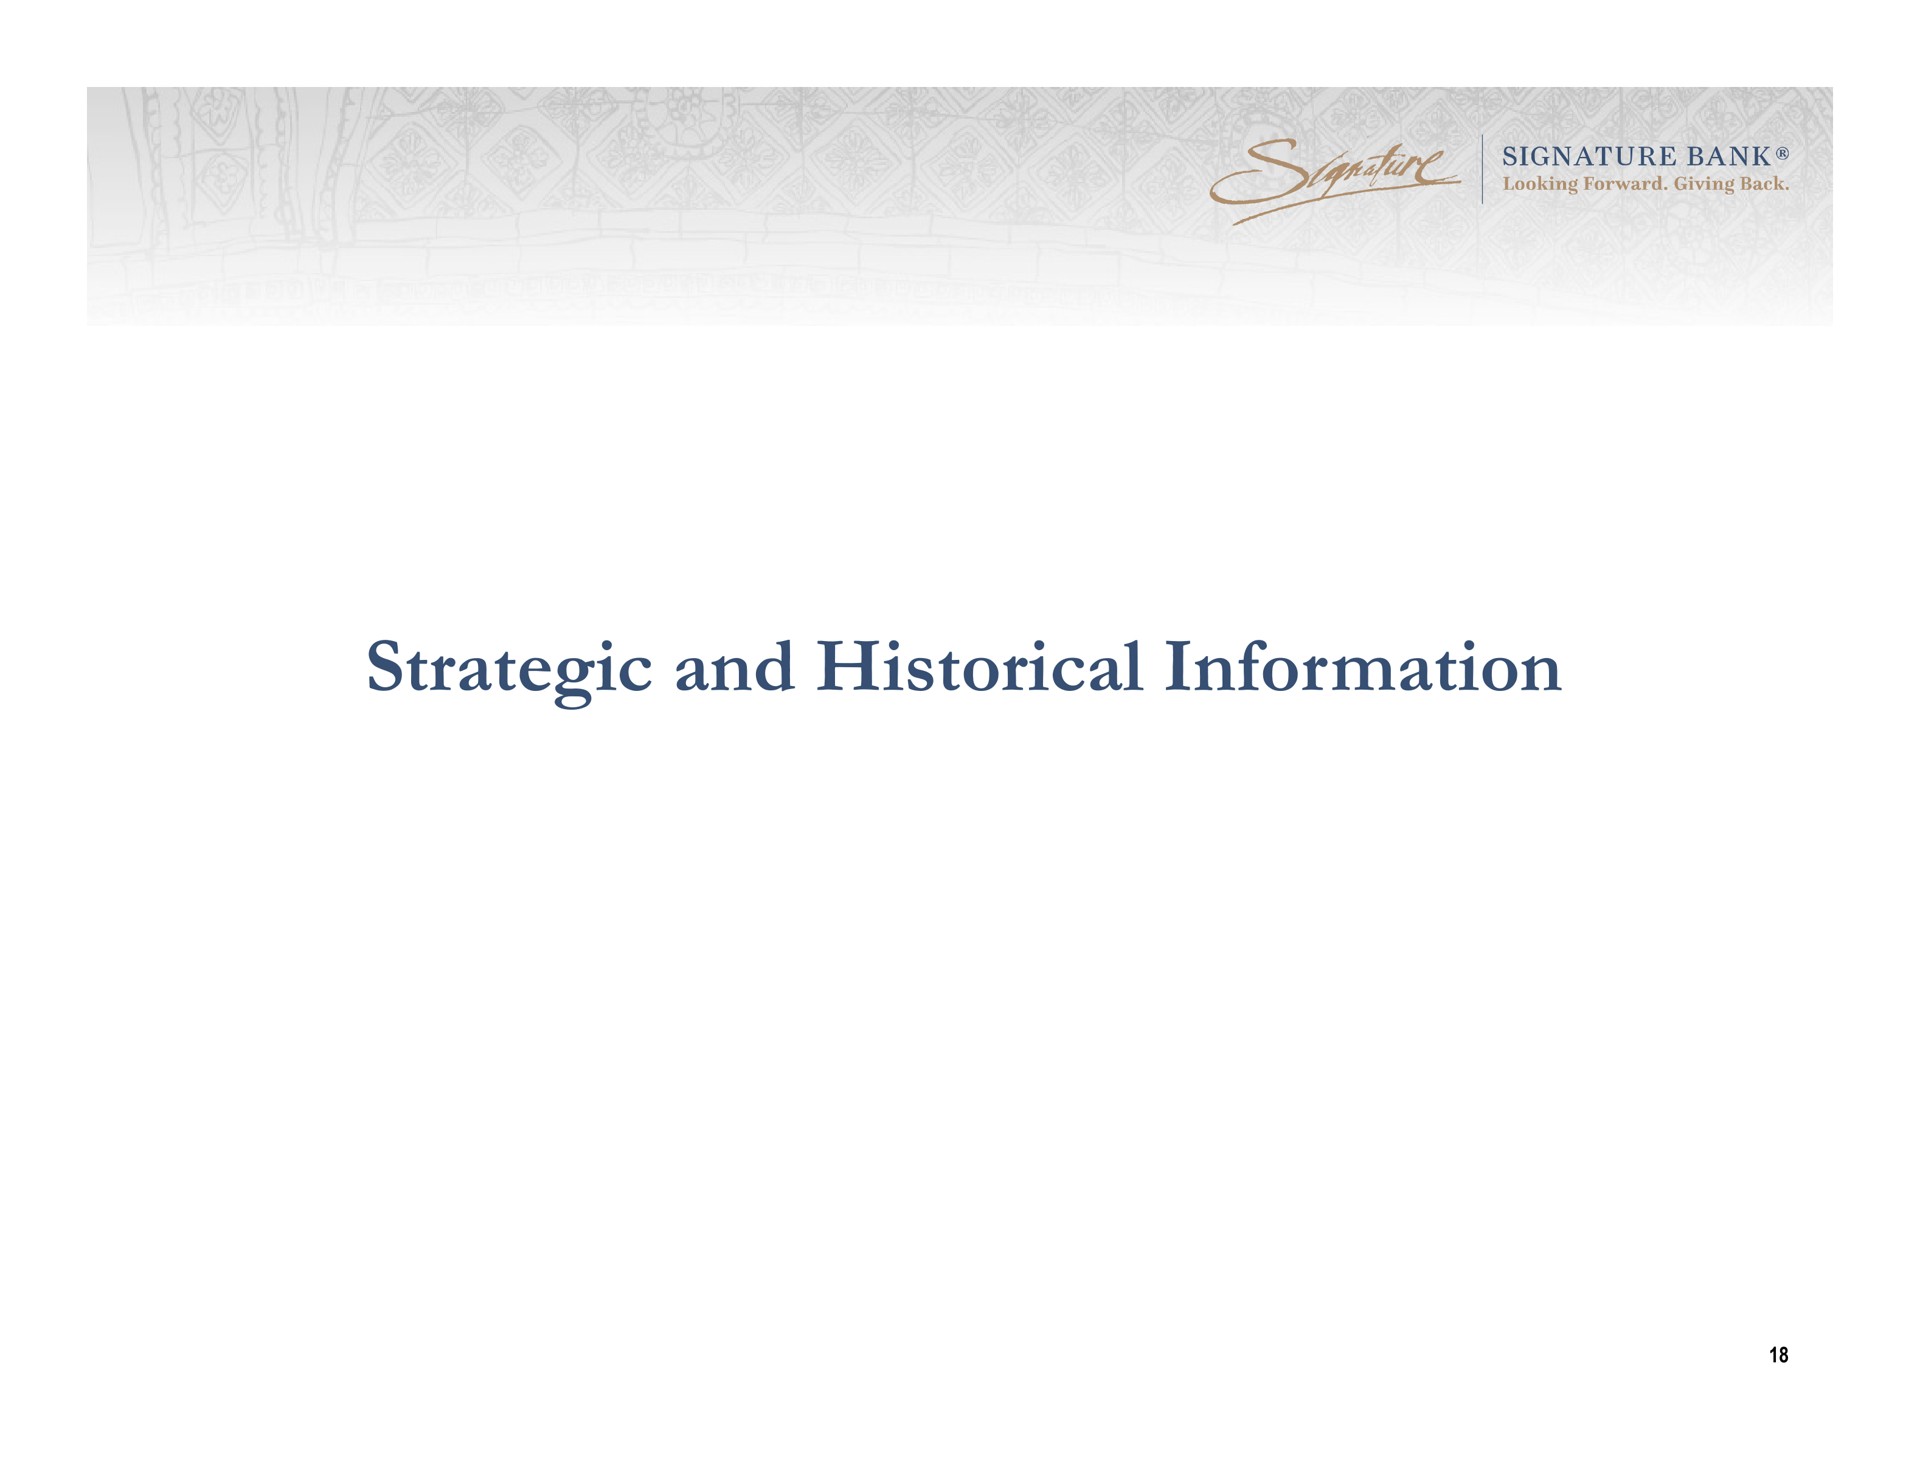 strategic and historical information | Signature Bank